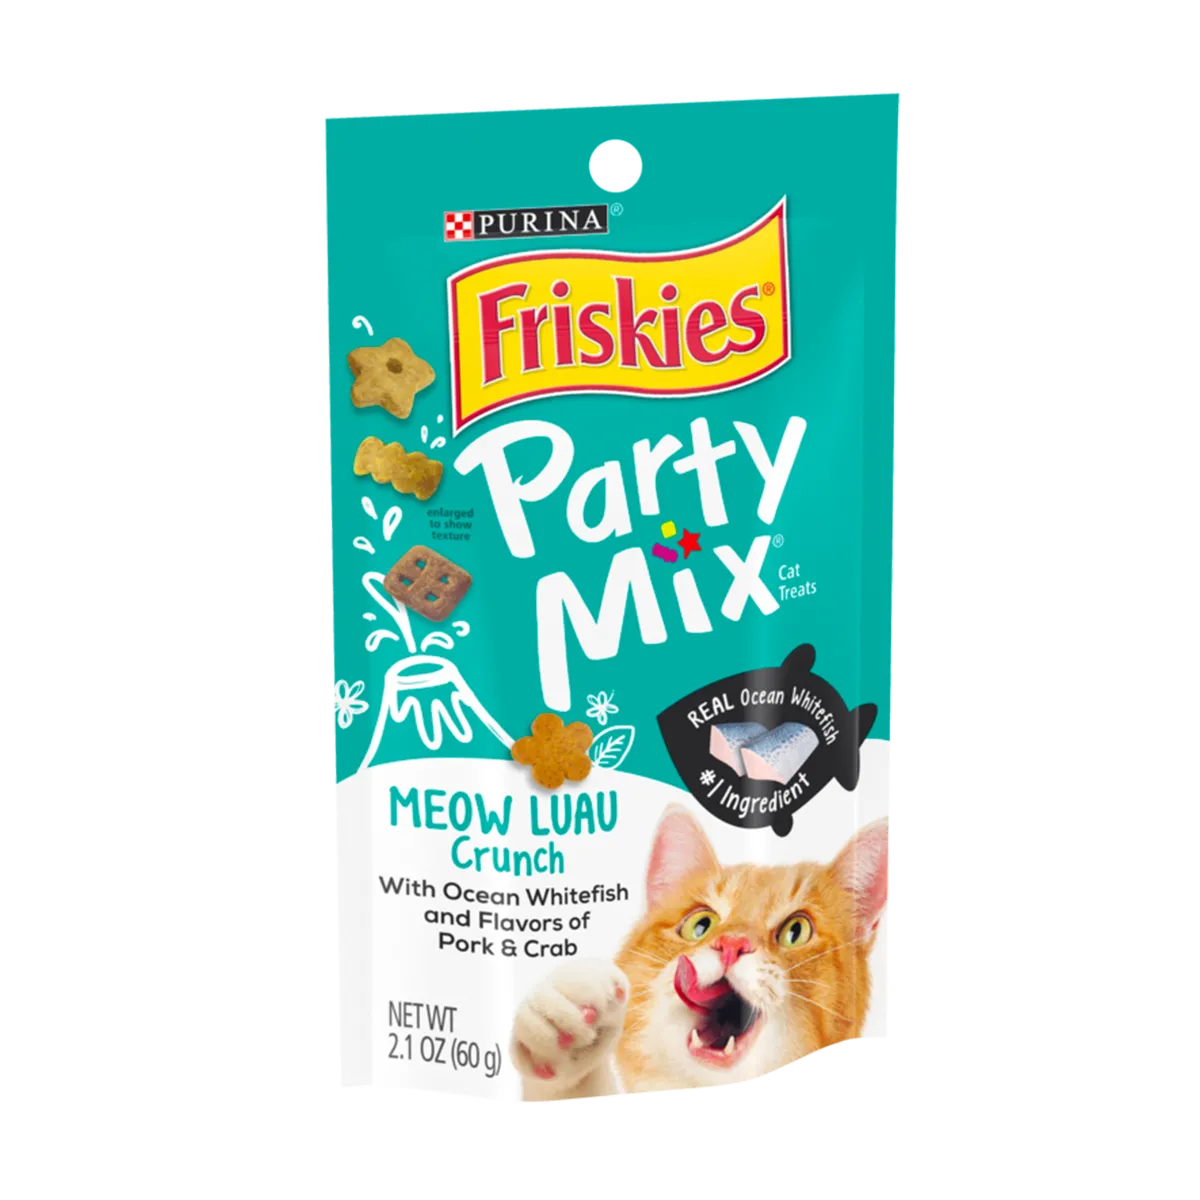 purina-friskies-party-mix-meow-luau-crunch